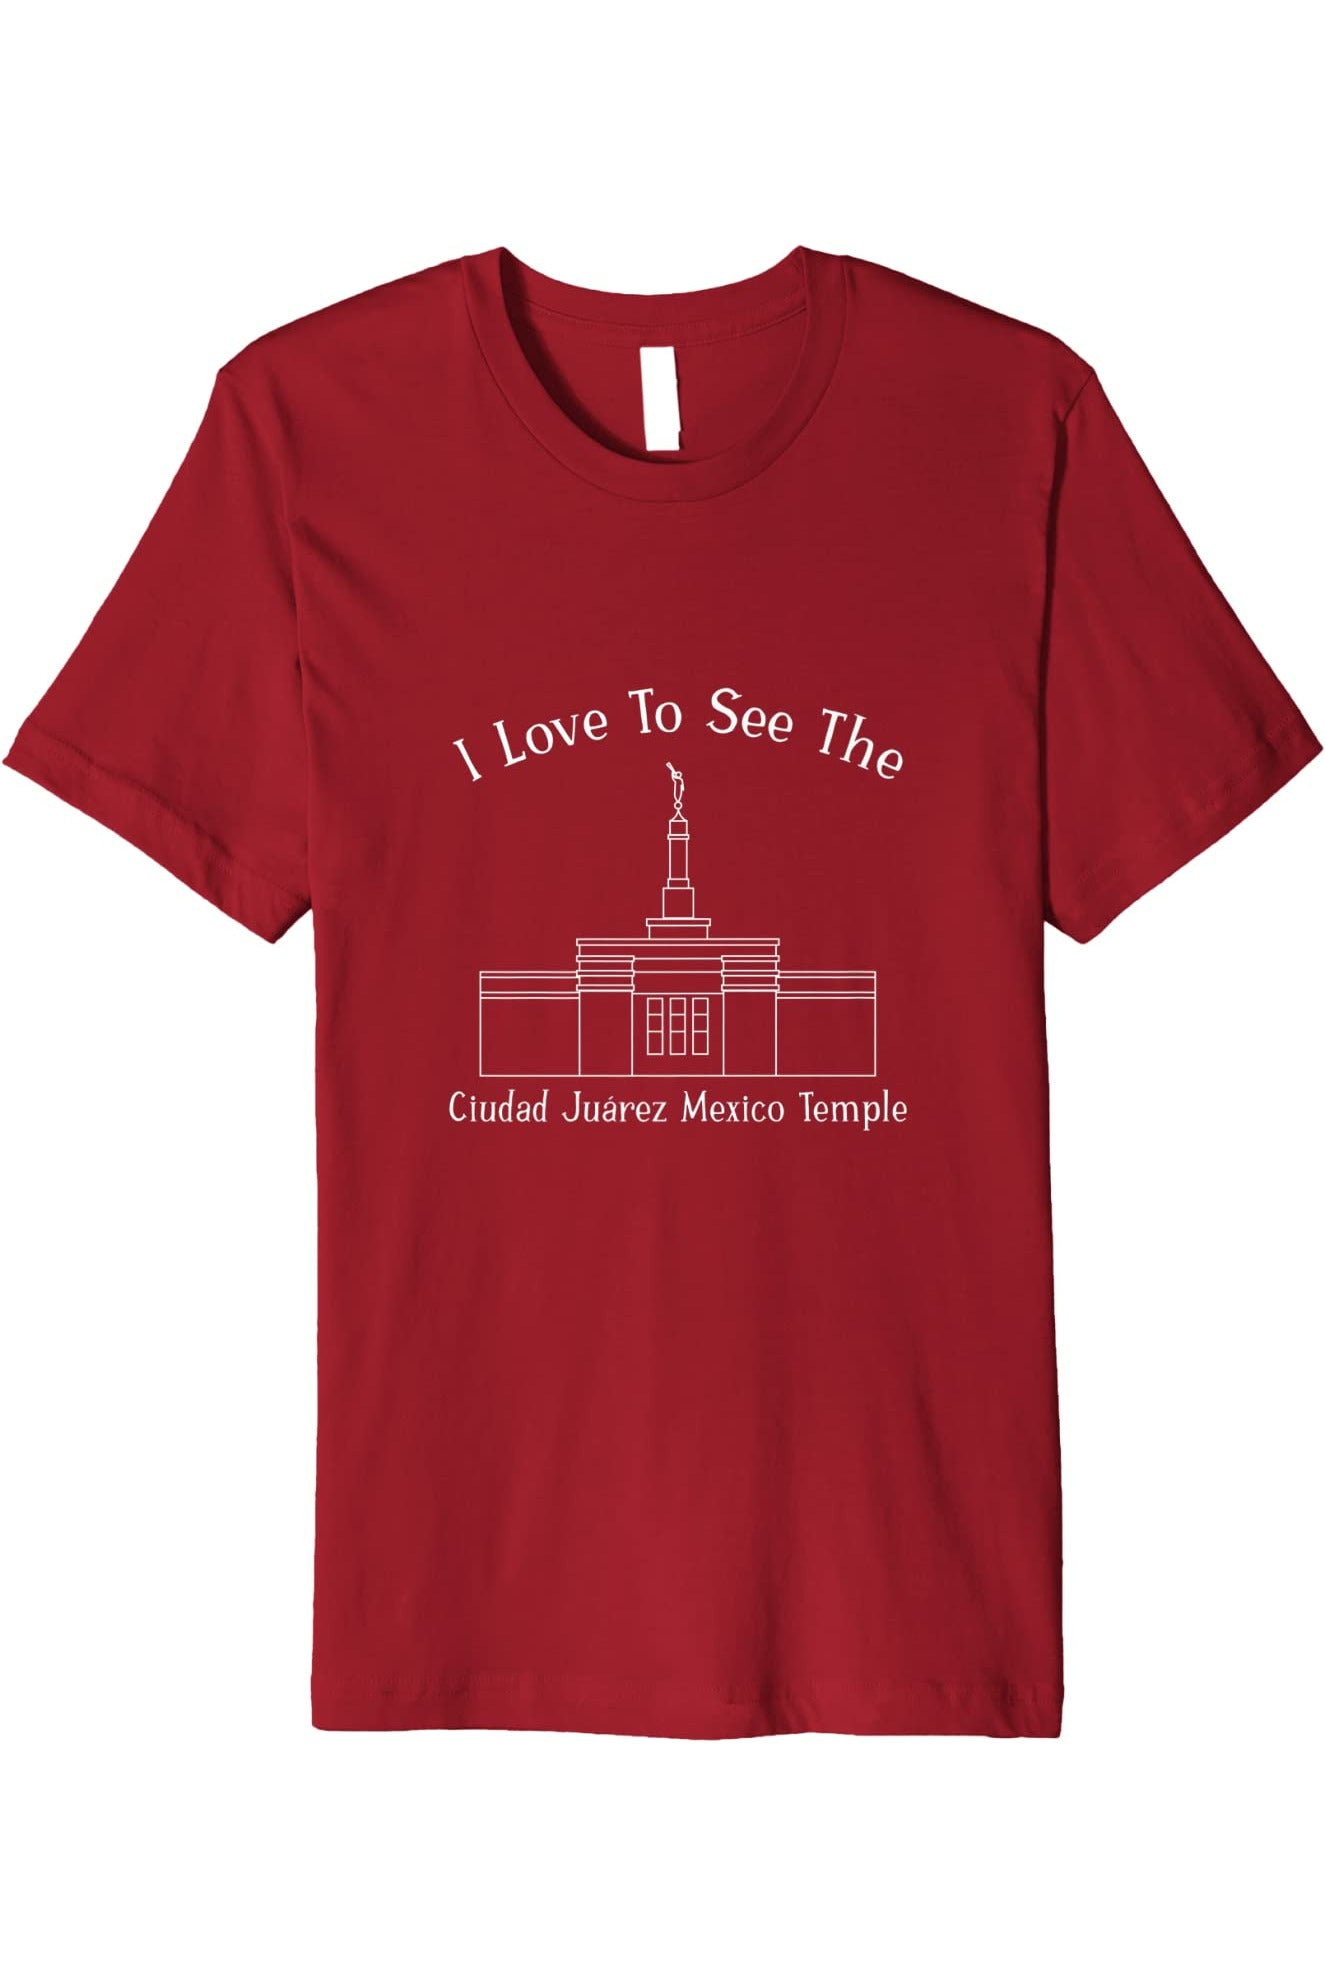 Ciudad Juarez Mexico Temple T-Shirt - Premium - Happy Style (English) US